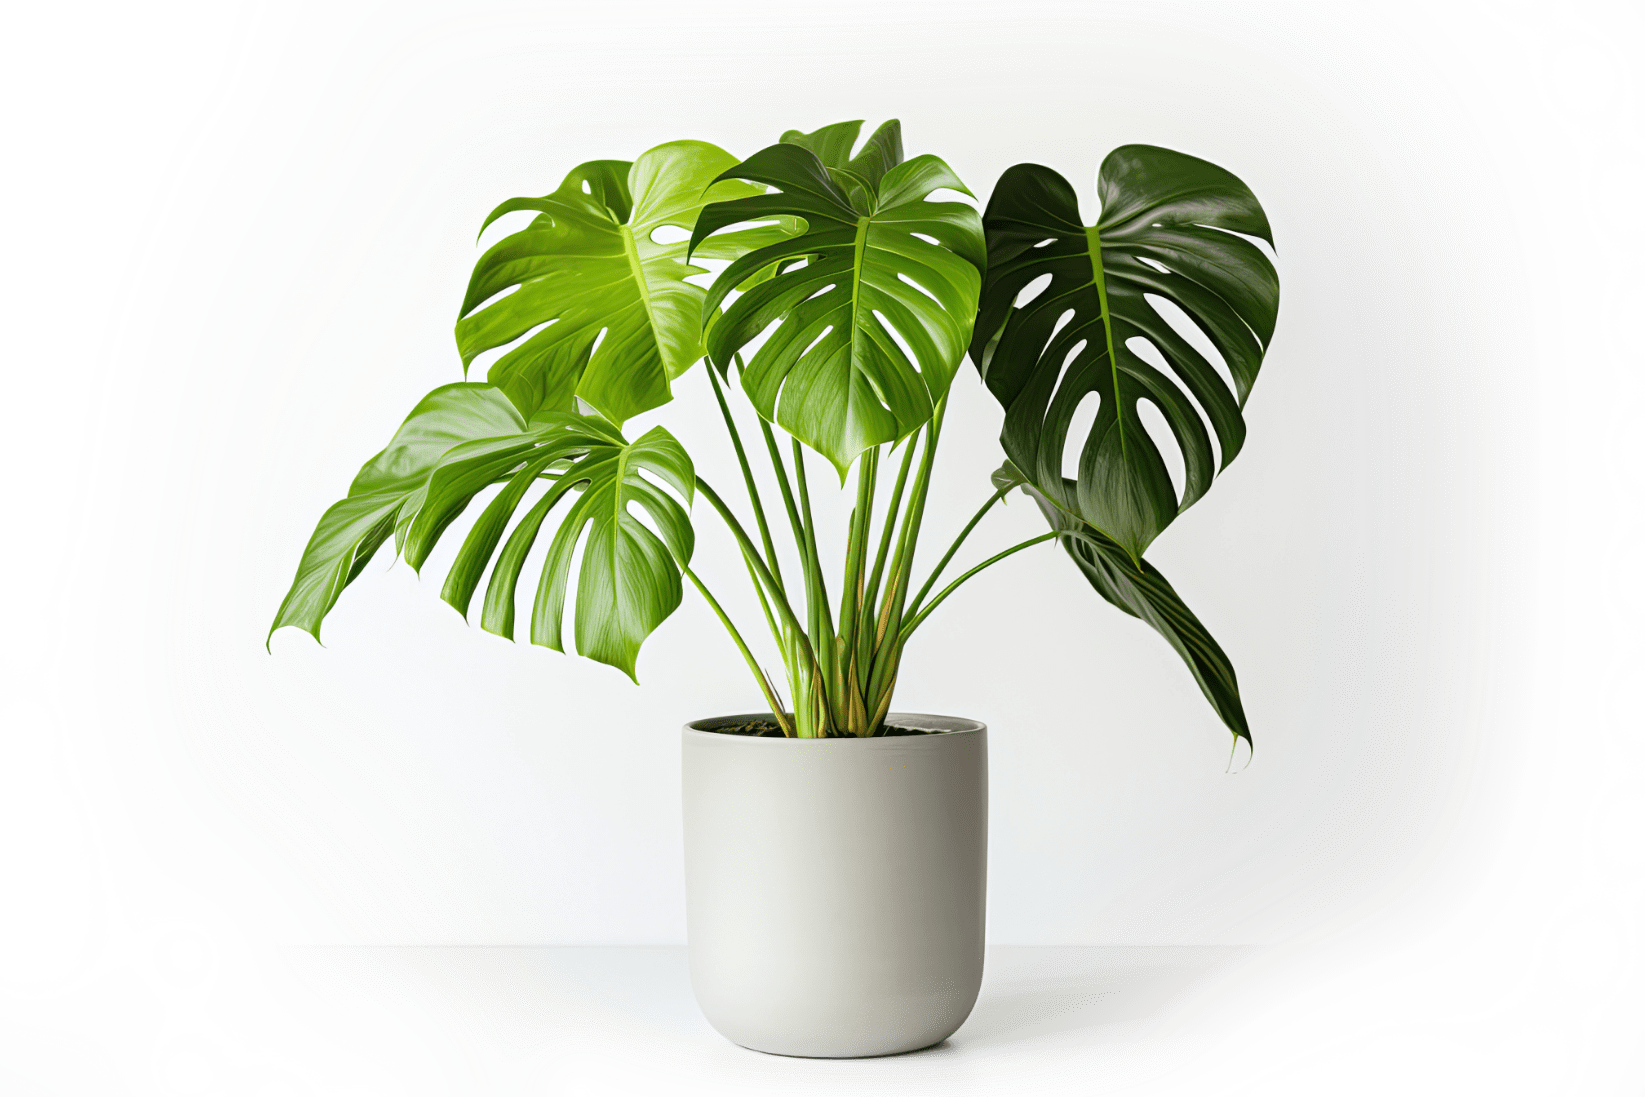 Green plant in white pot